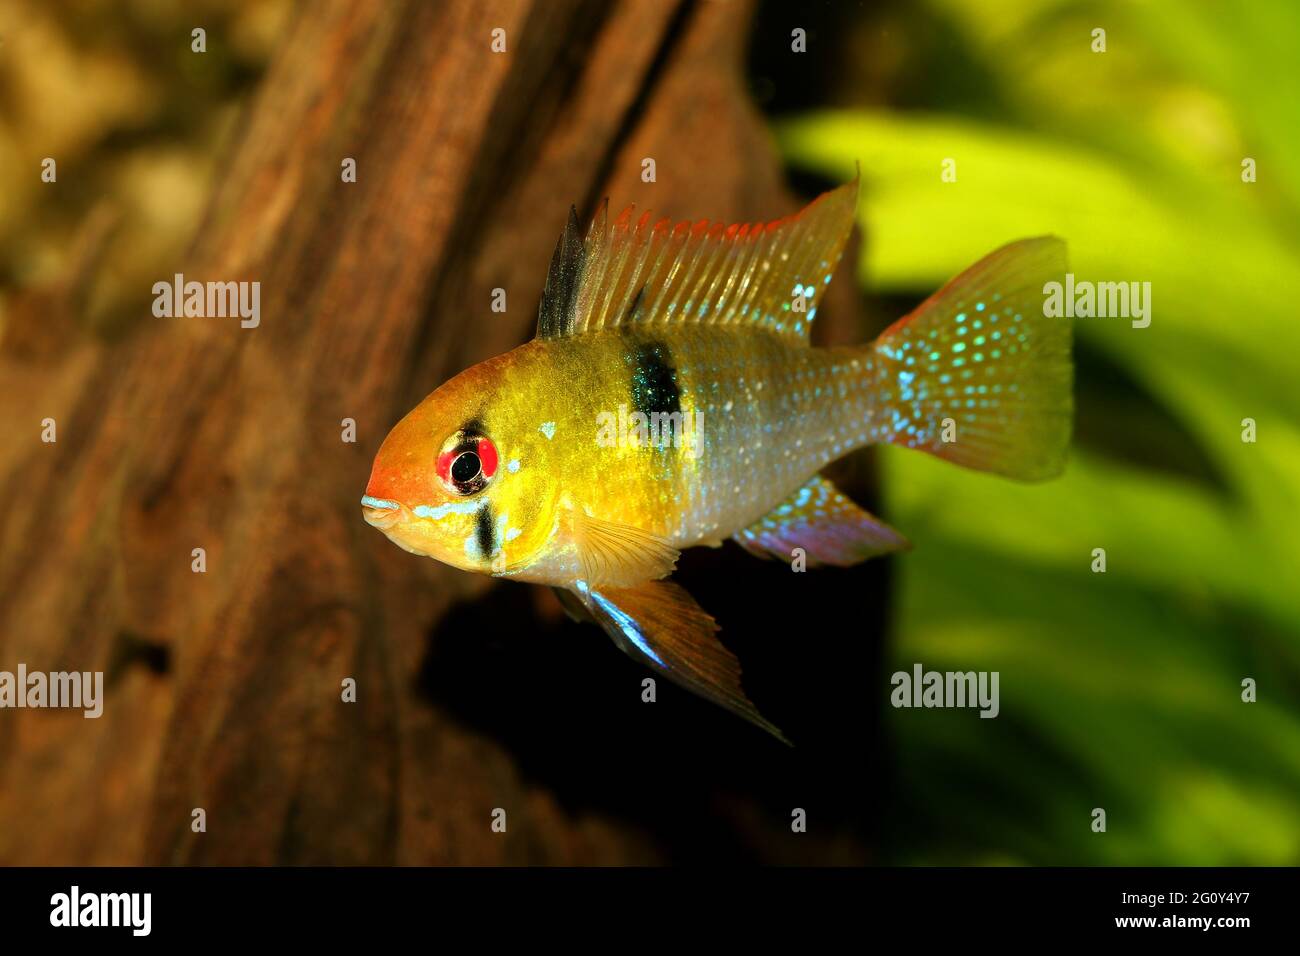 German Ram cichlid Mikrogeophagus ramirezi aquarium fish butterfly cichlid Stock Photo